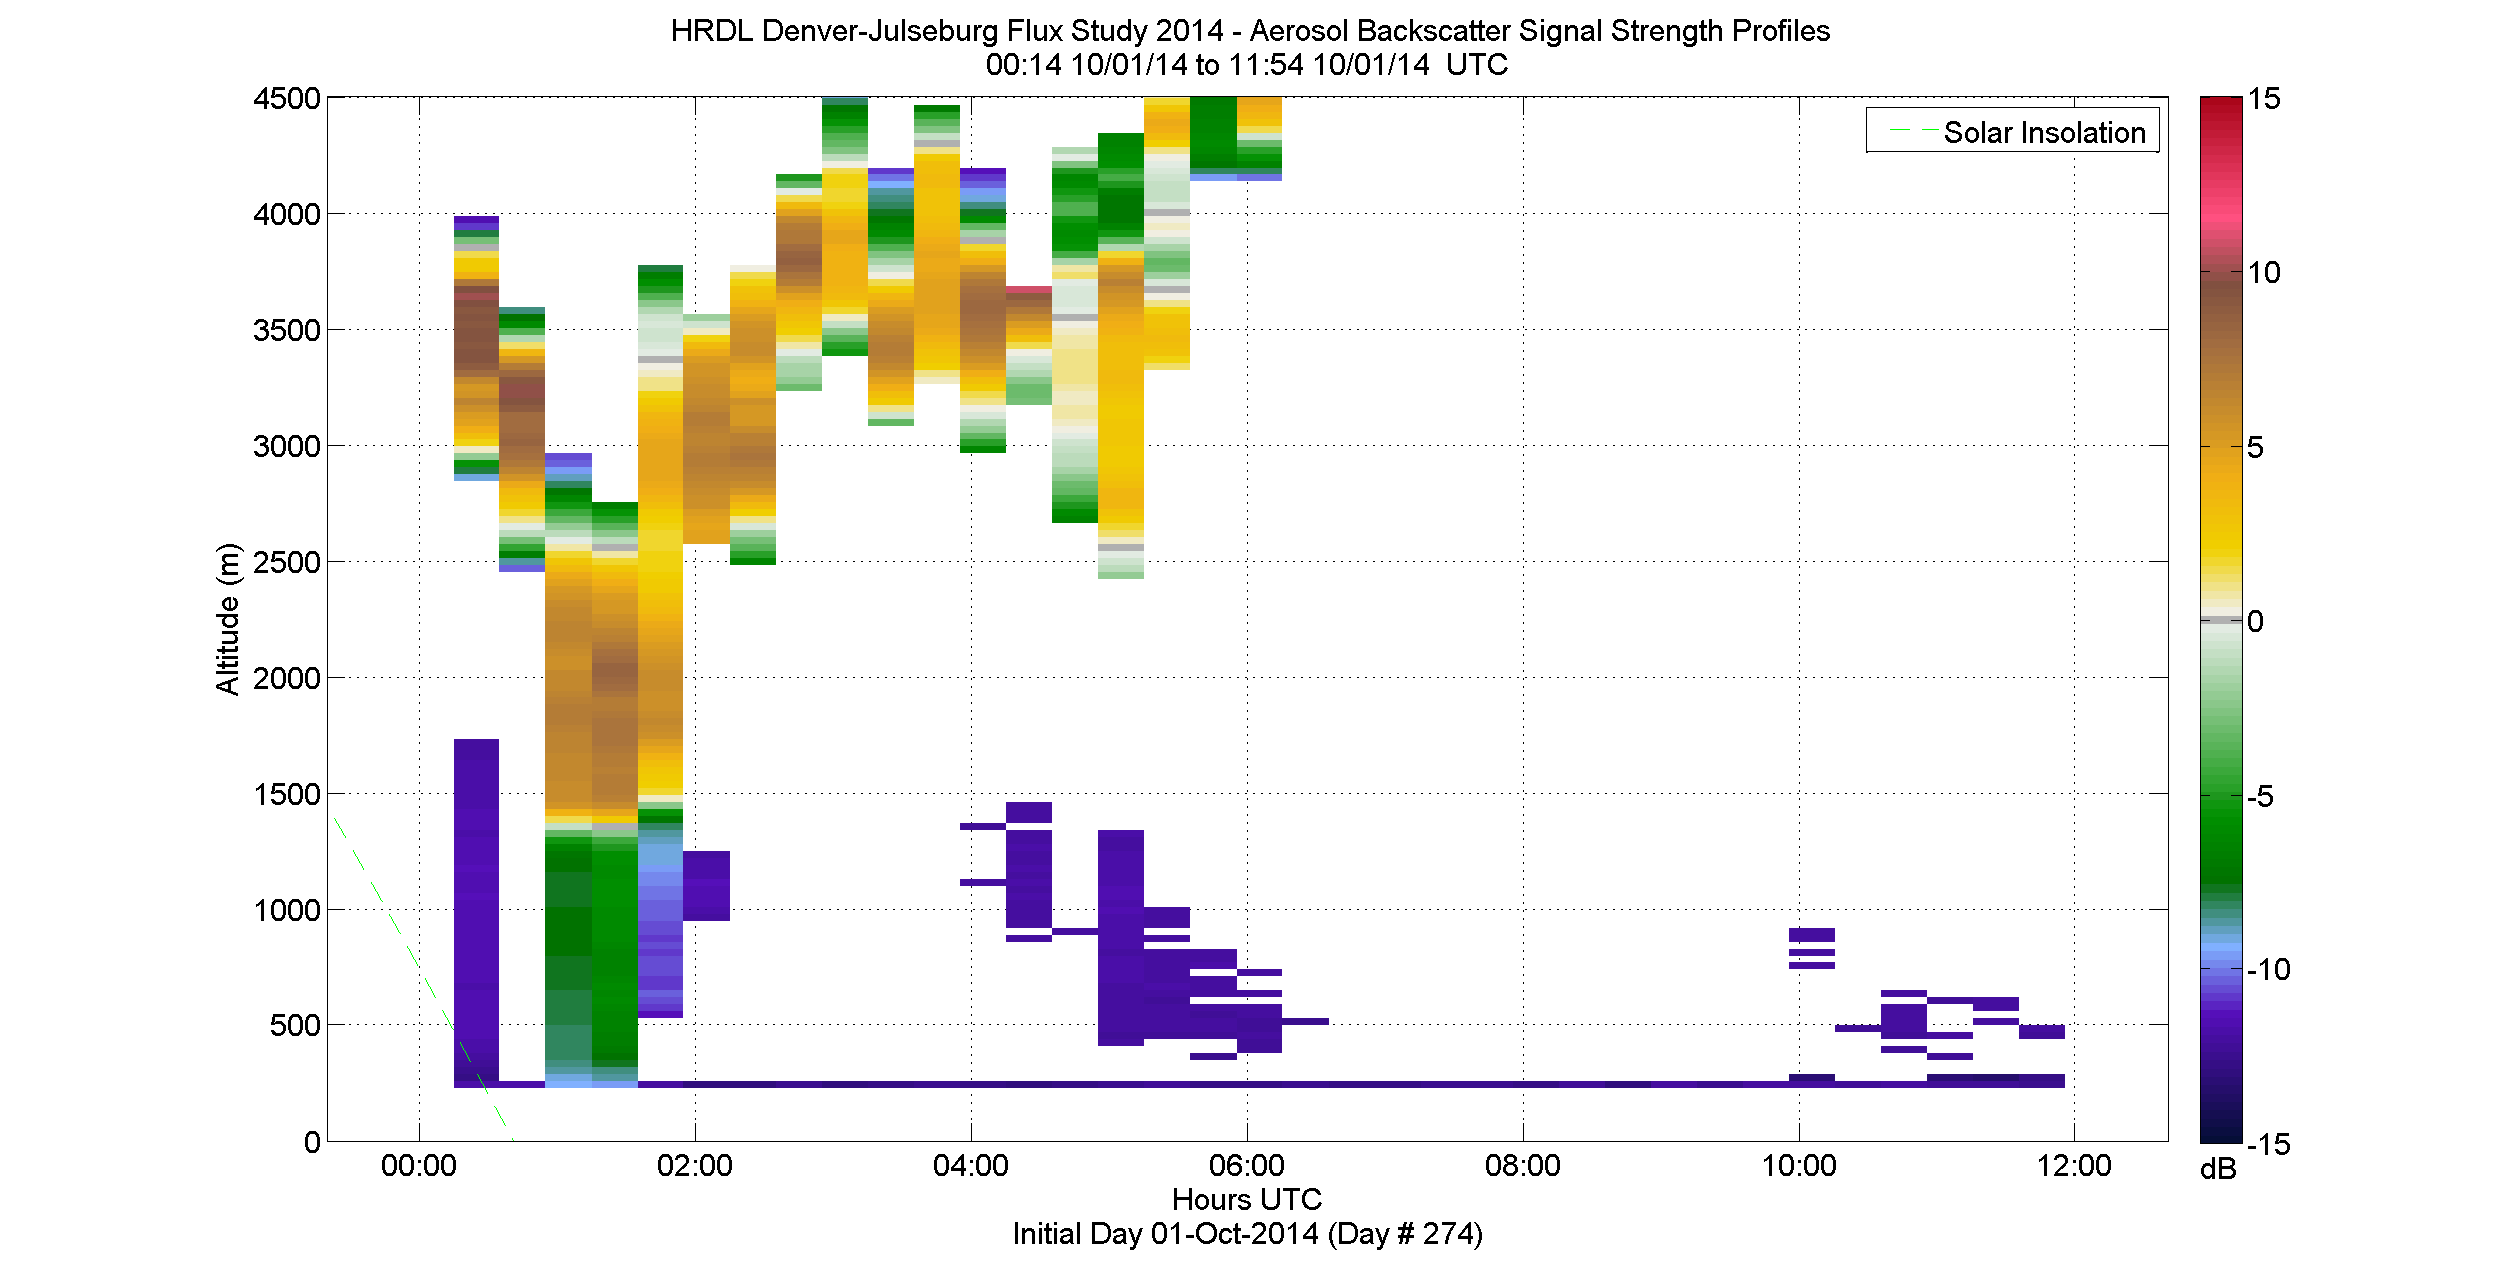 HRDL vertical intensity profile - October 1 am